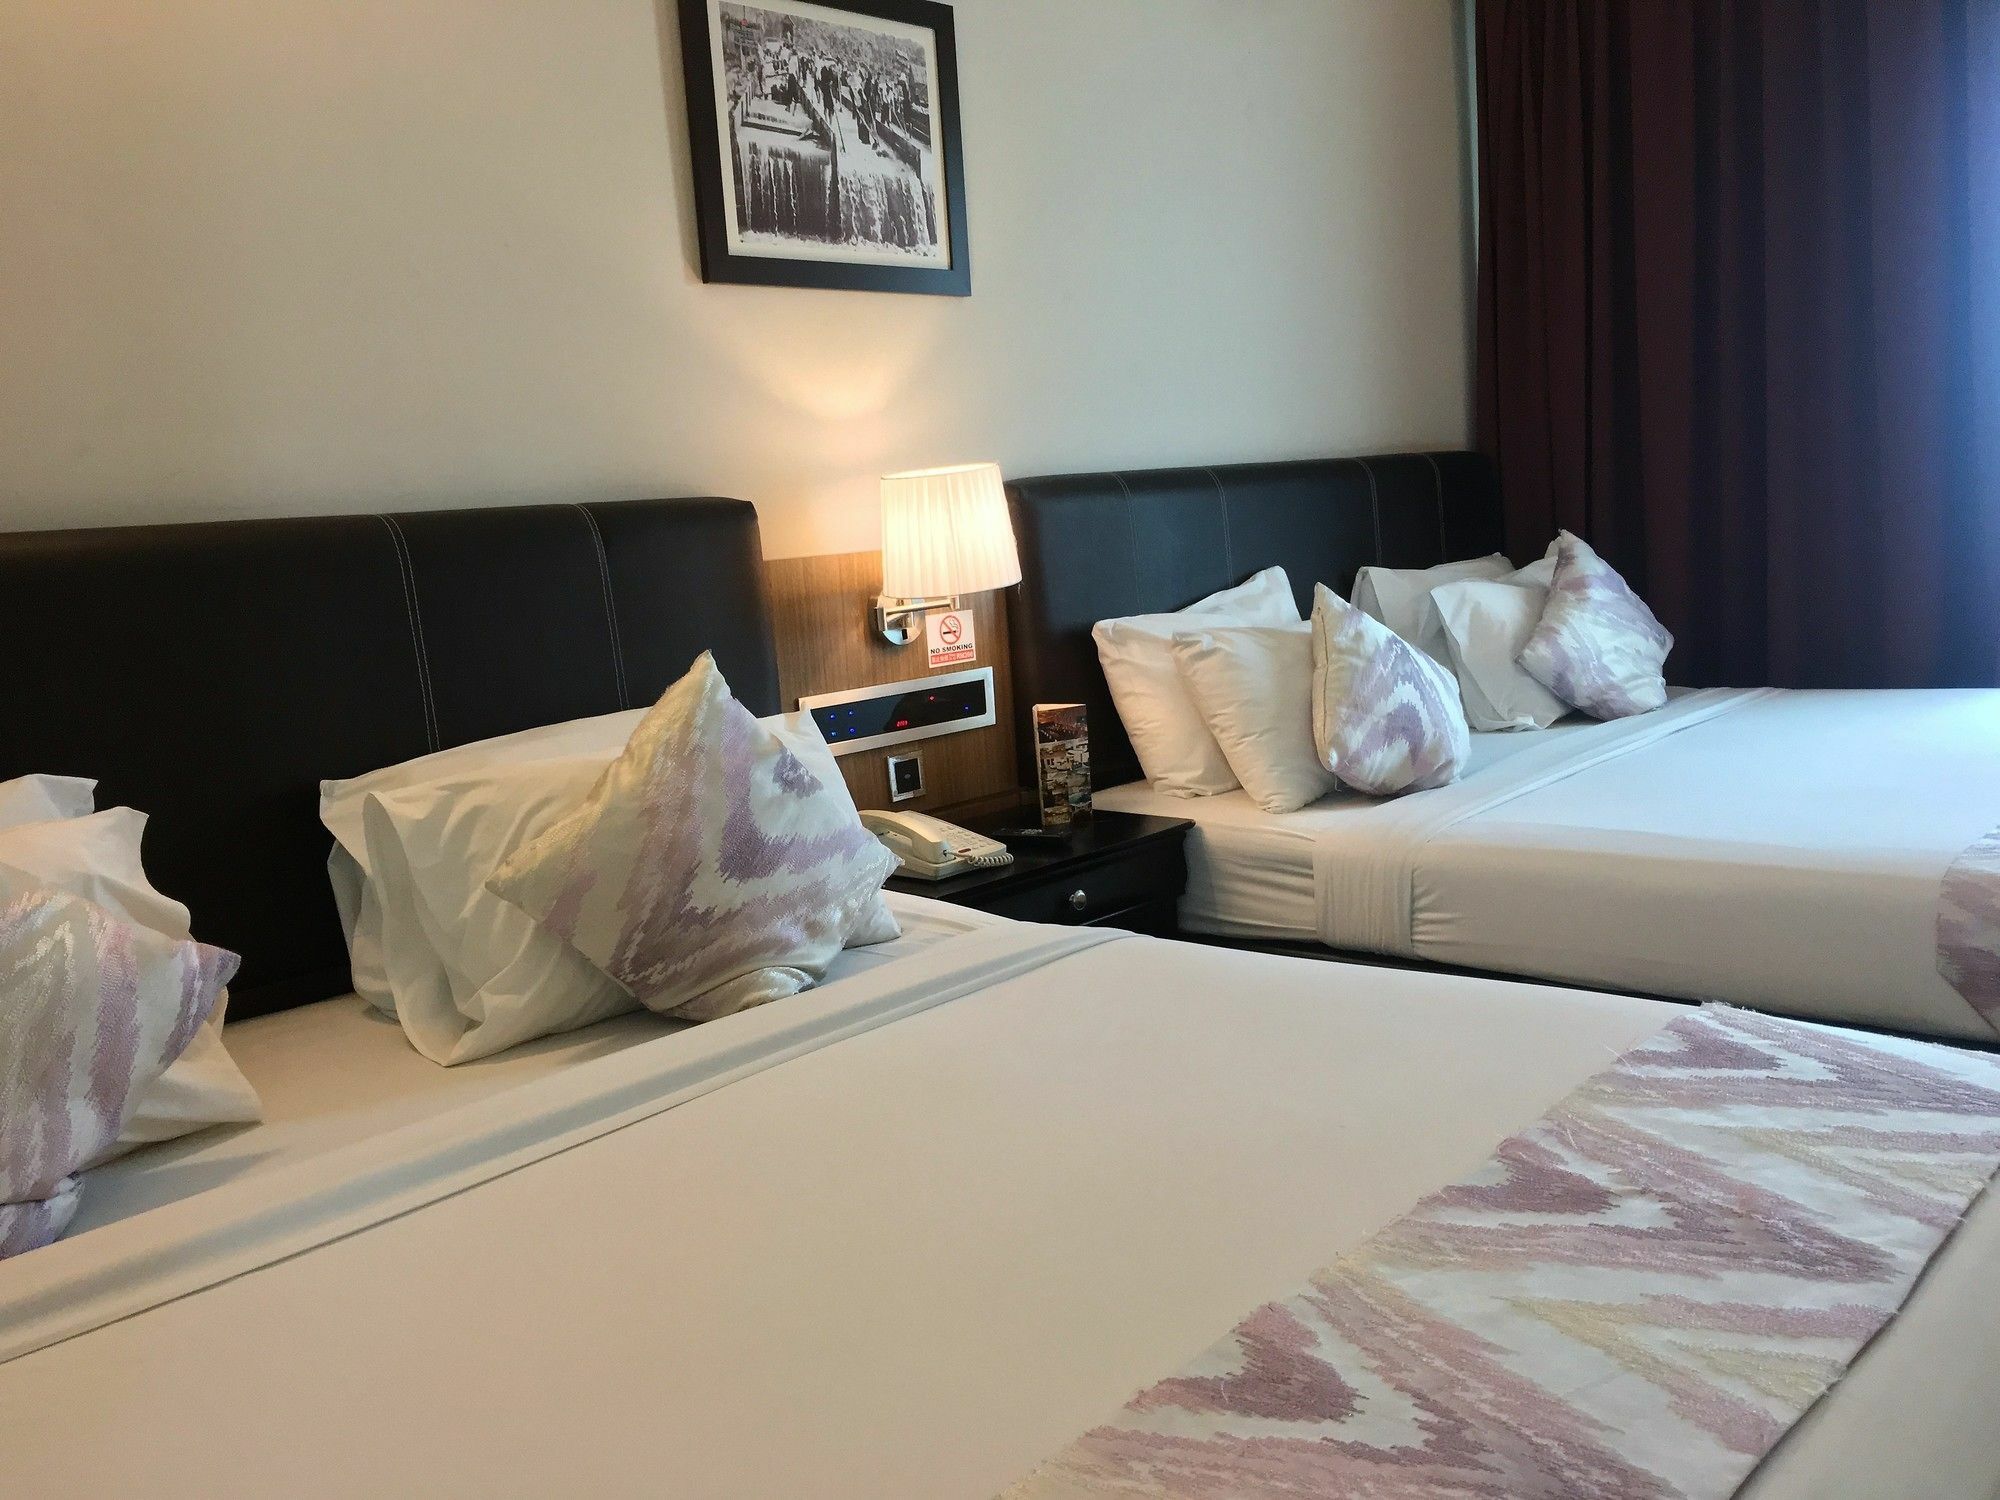 Kinta Riverfront Hotel & Suites Ipoh Buitenkant foto